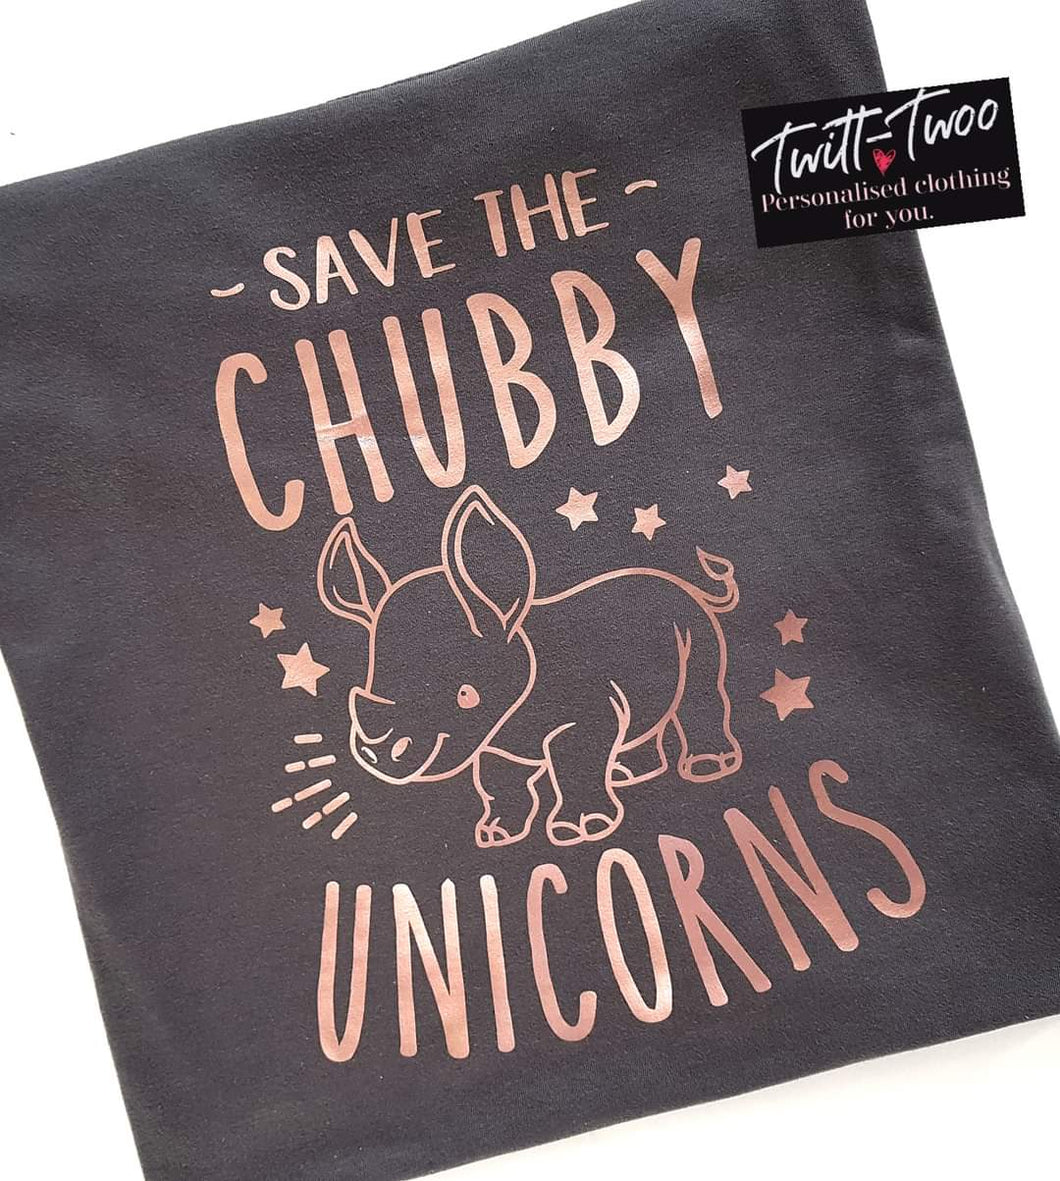 Chubby unicorn tshirt